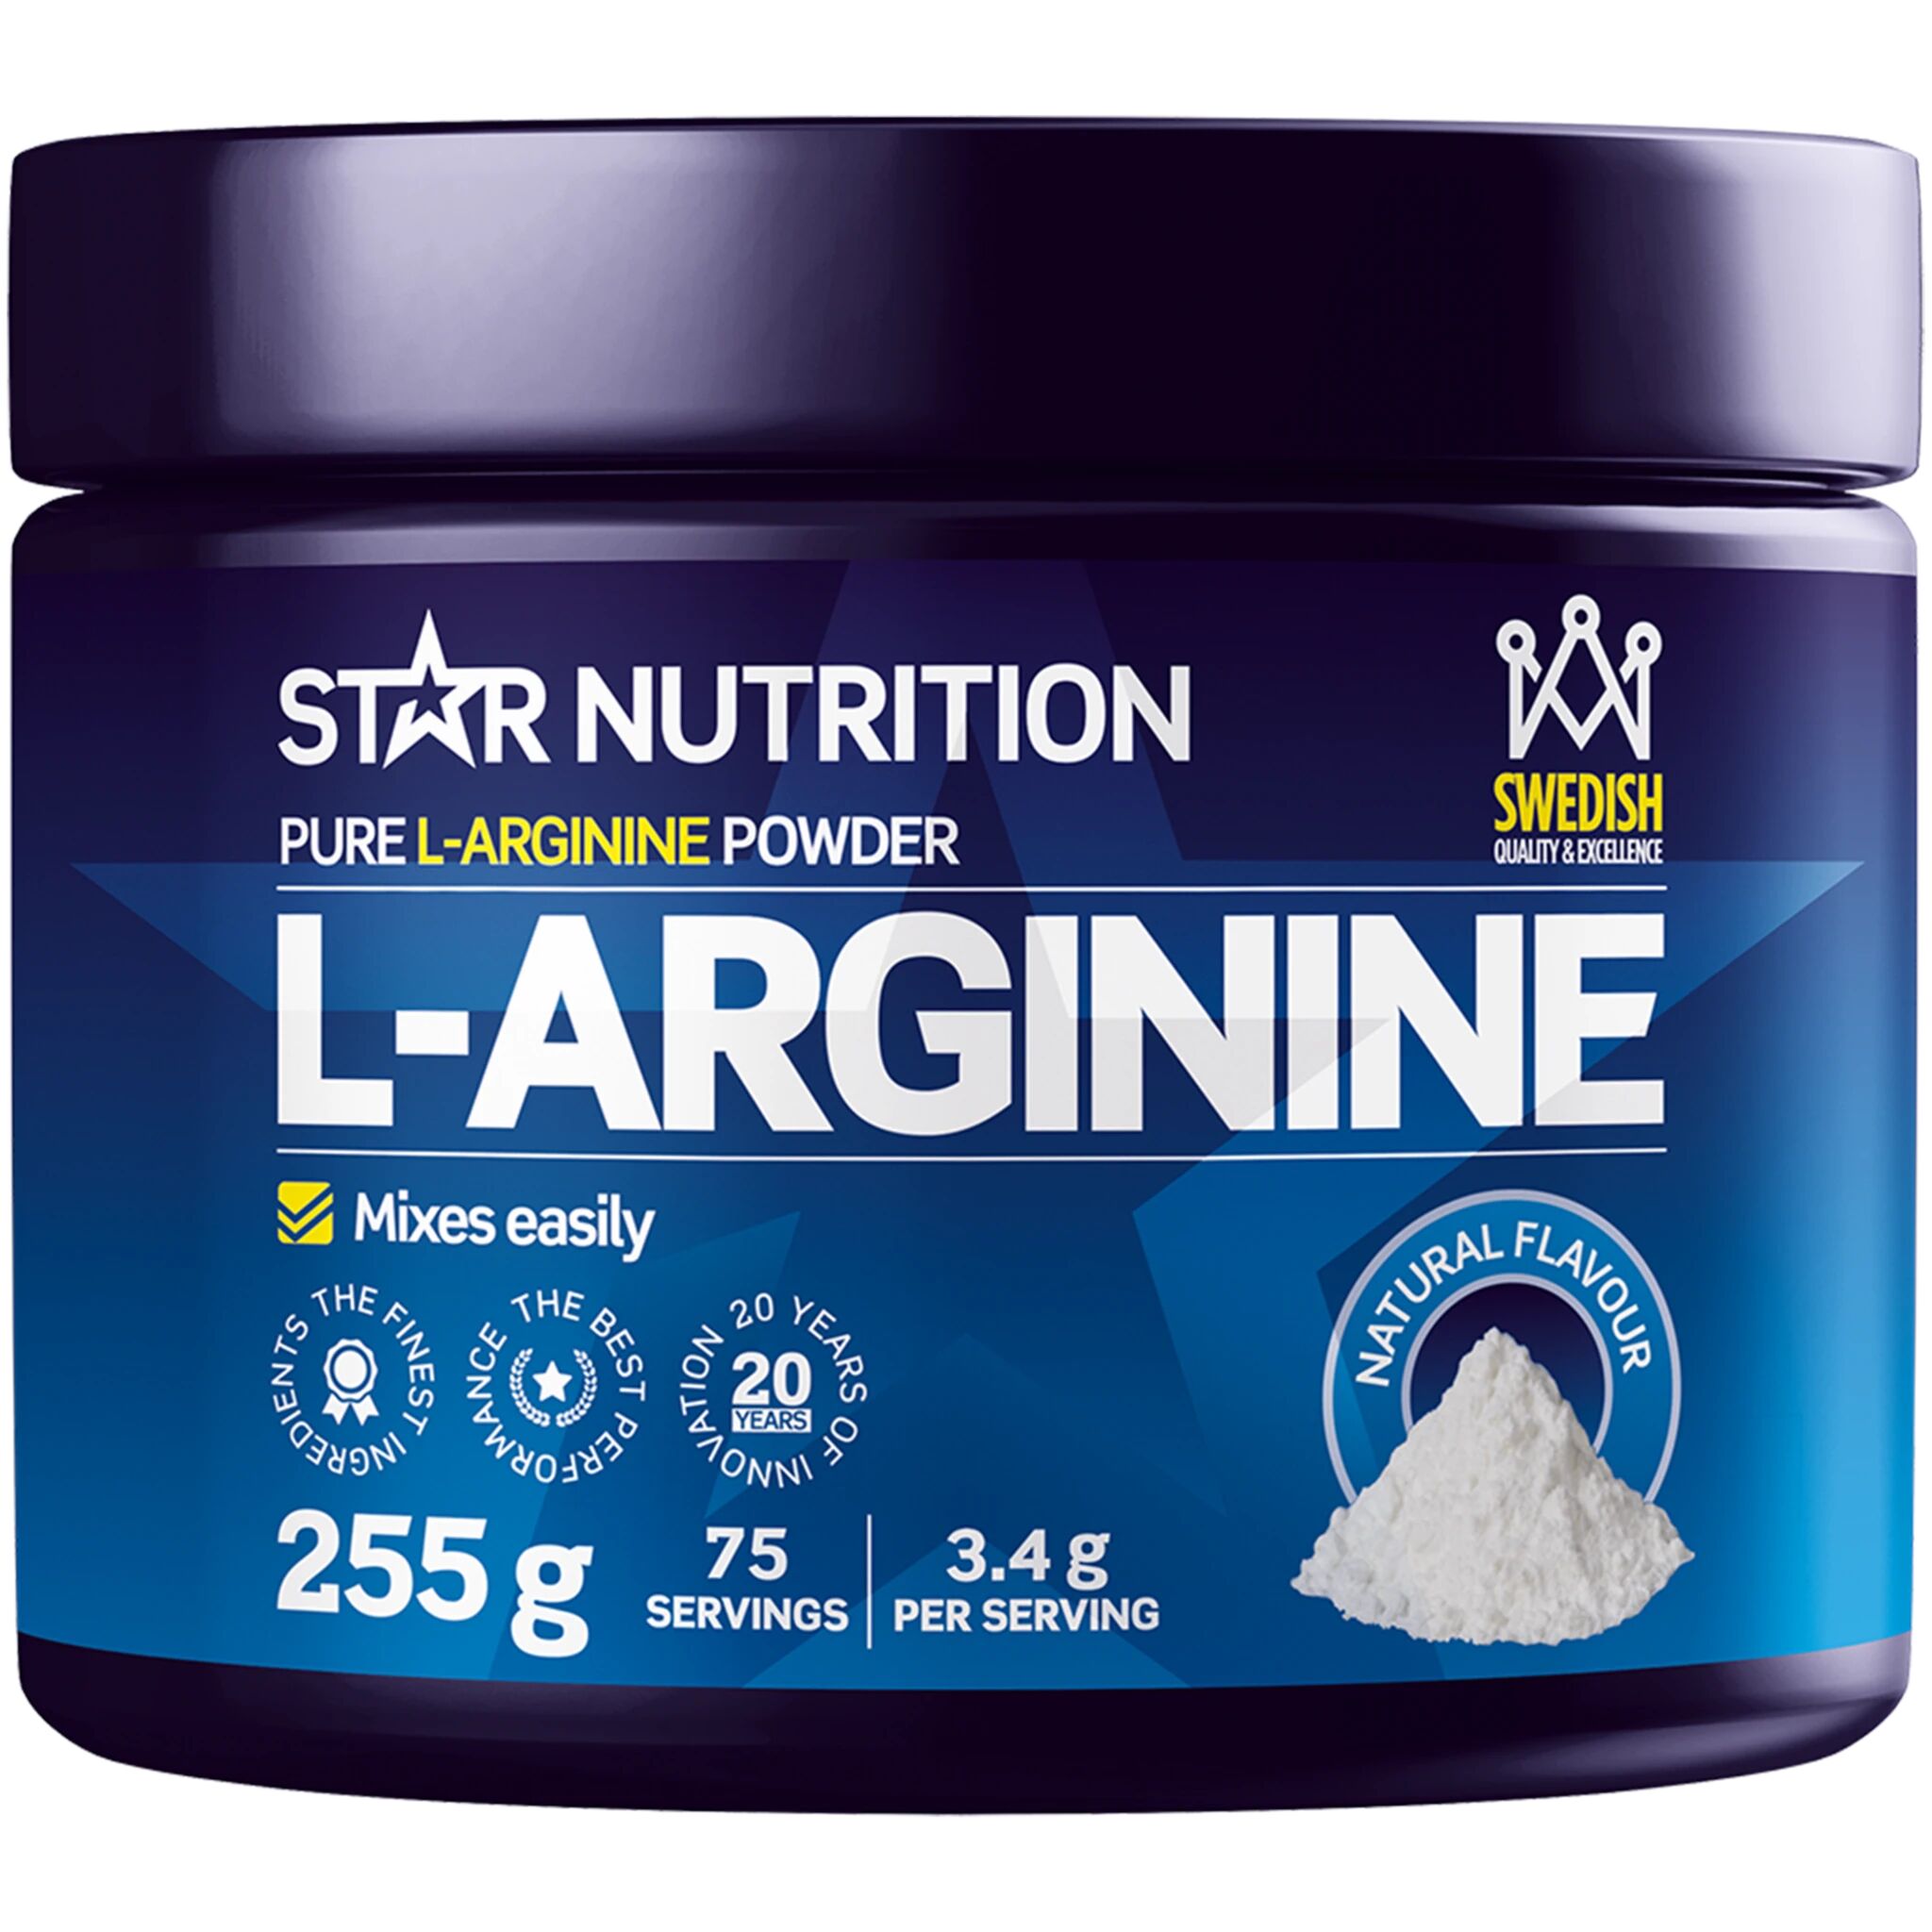 Star Nutrition - L-arginine, L-arginin STD STD